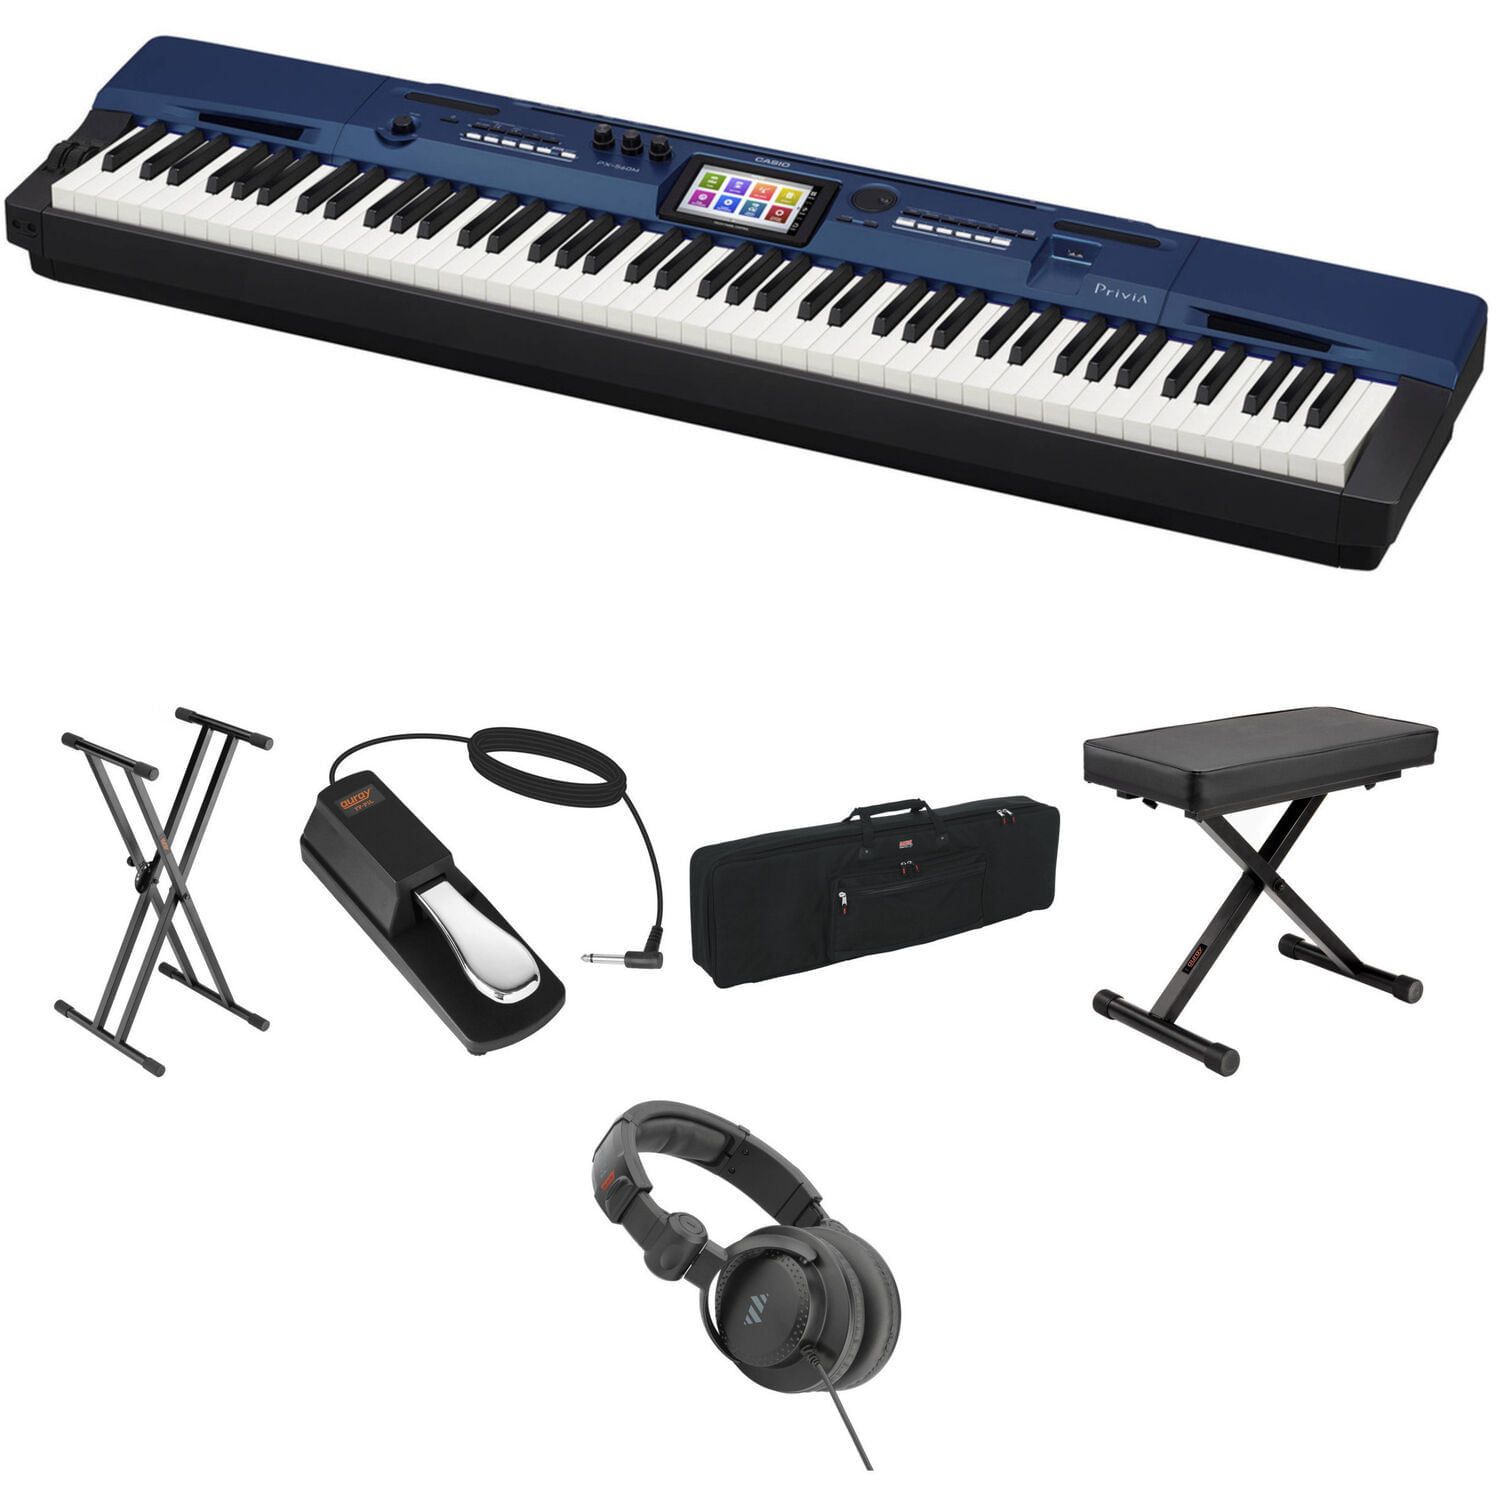 Bundle Essentials para Piano Digital Portátil Casio Px 560